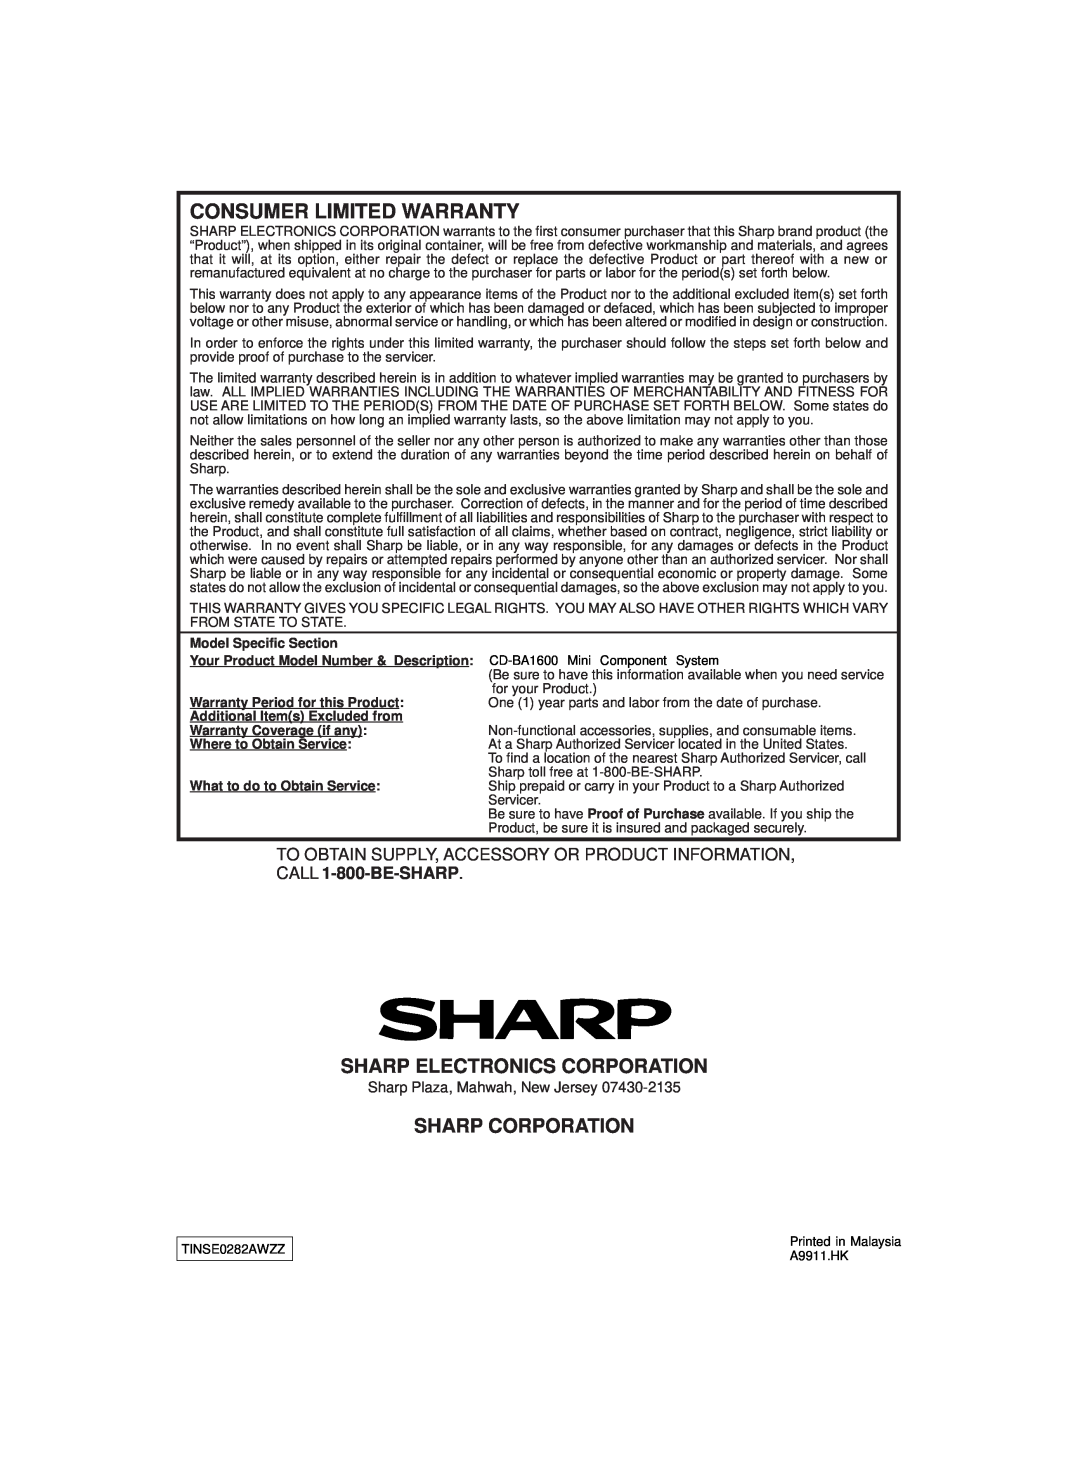 Sharp CD-BA1600 Consumer Limited Warranty, Sharp Electronics Corporation, Sharp Corporation, Model Specific Section 